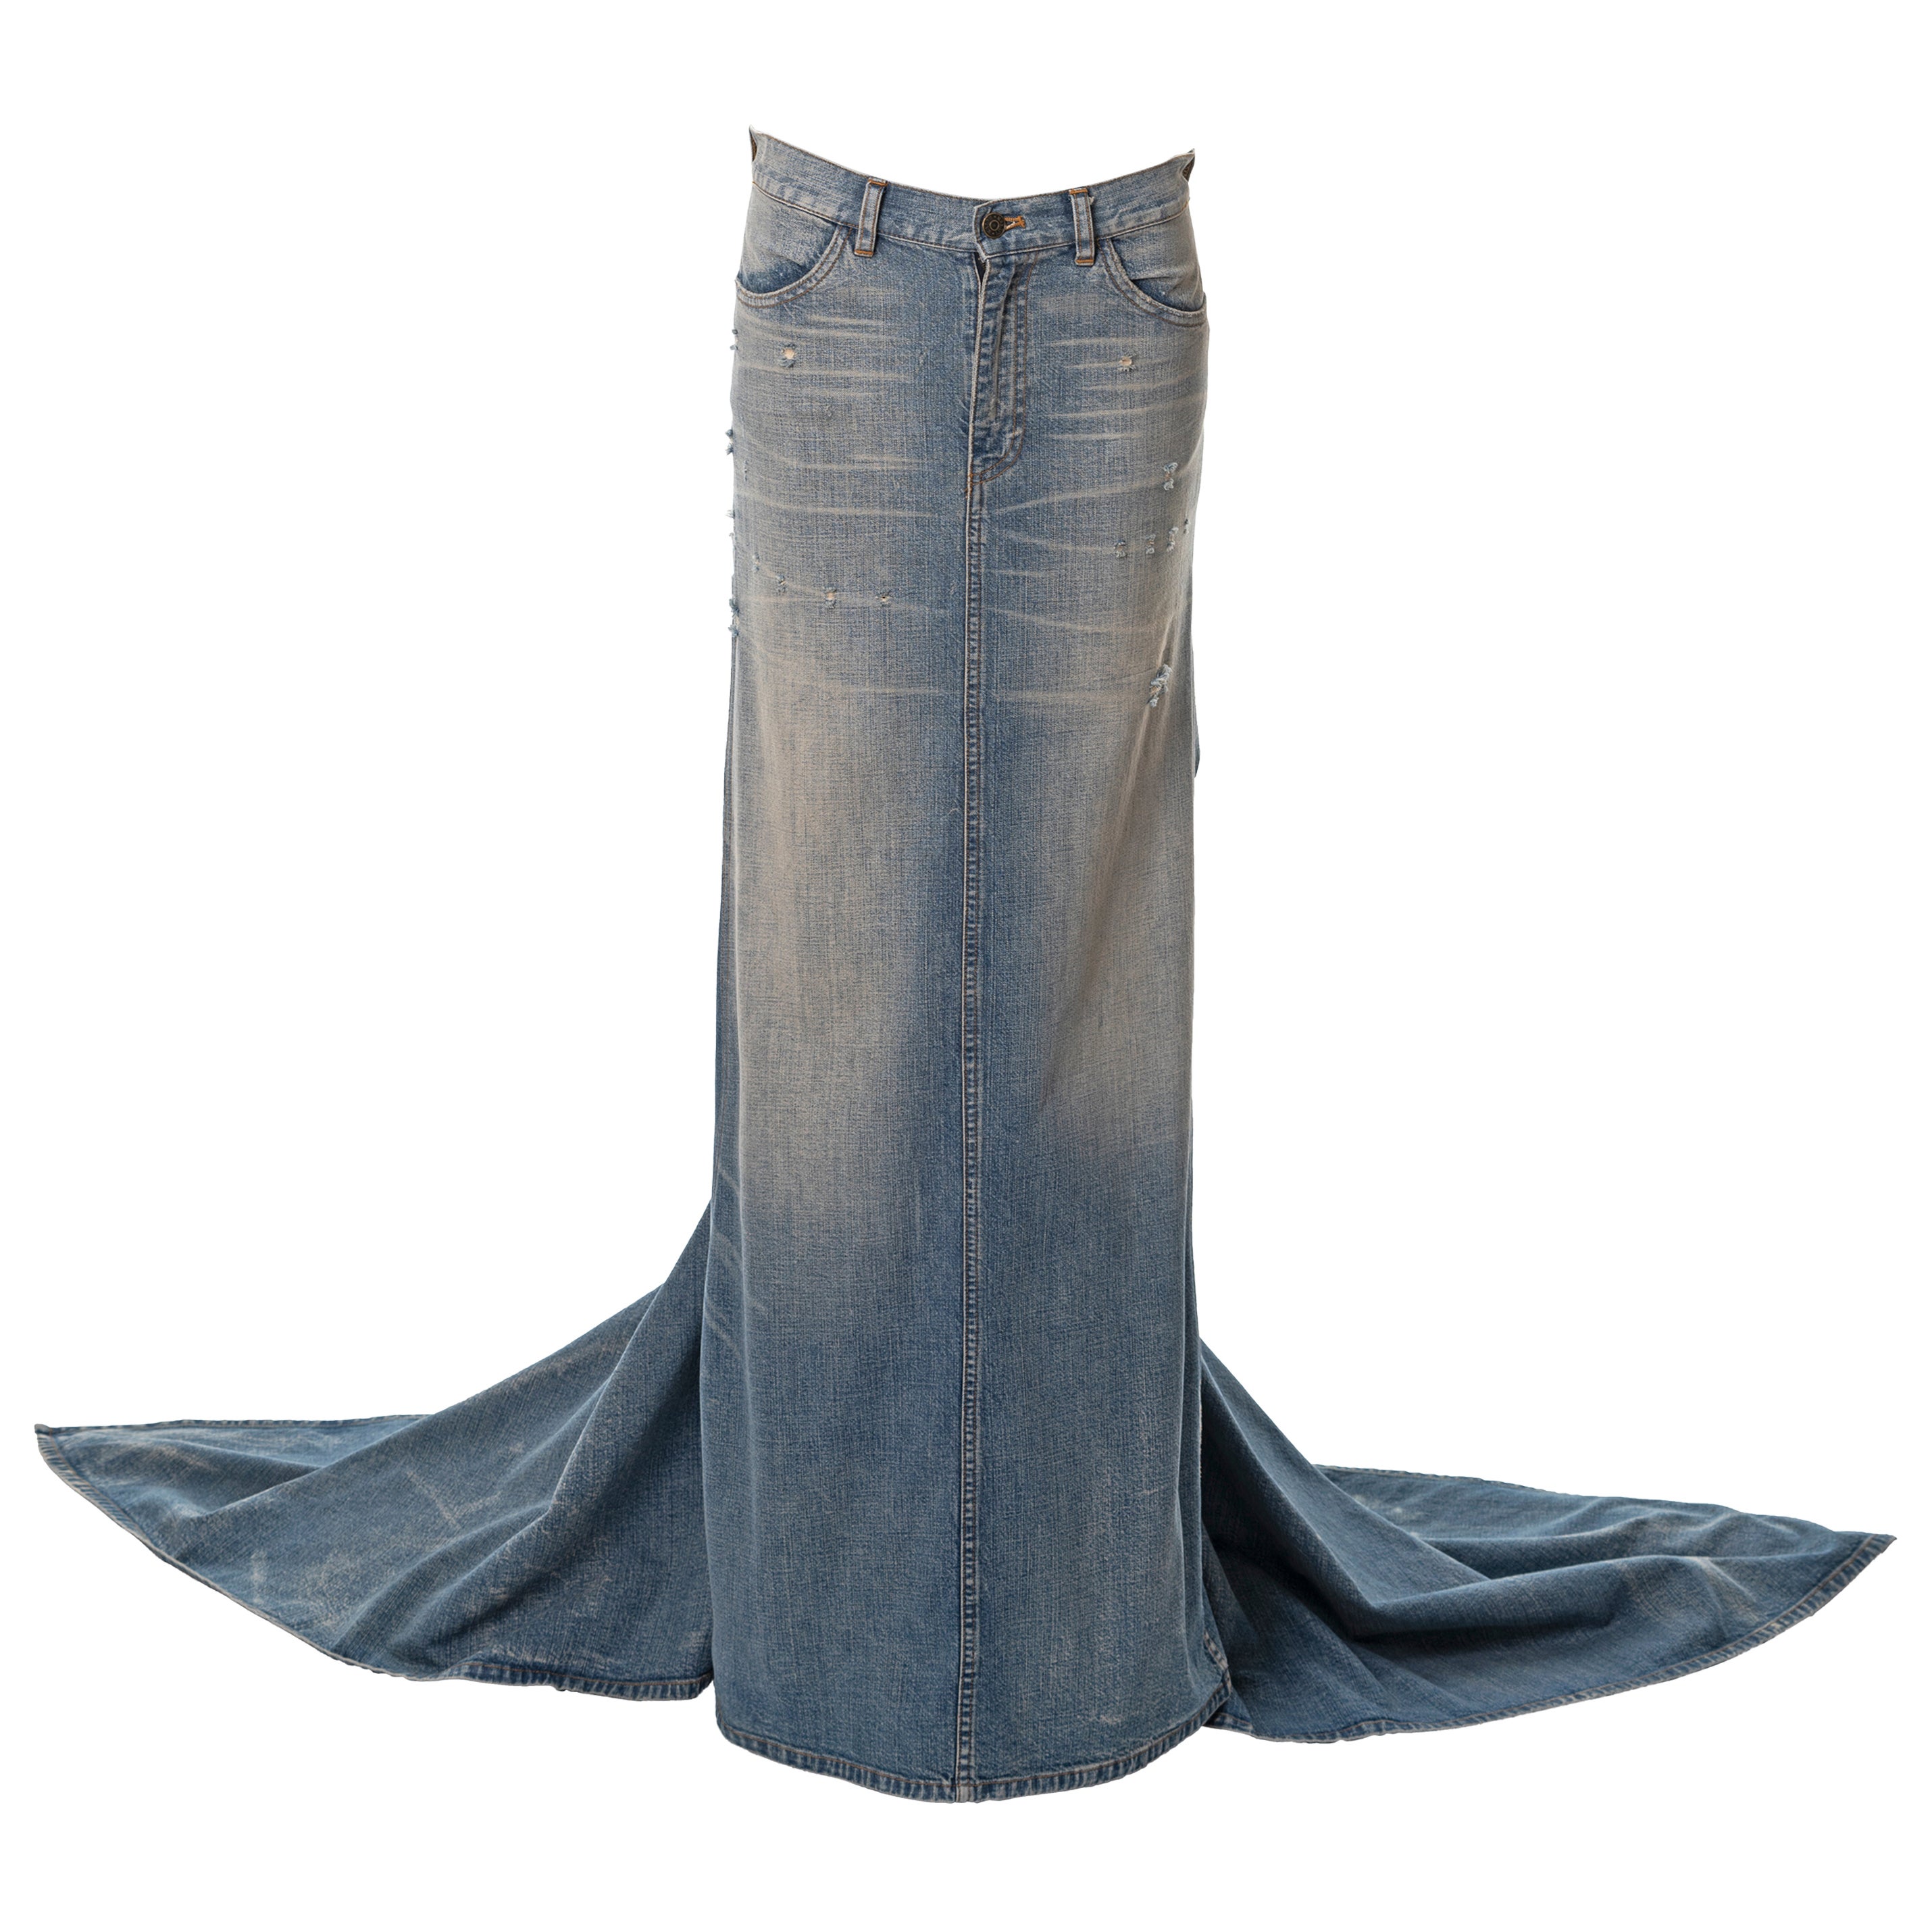 Ralph Lauren sandwashed denim maxi skirt with train, ss 2003